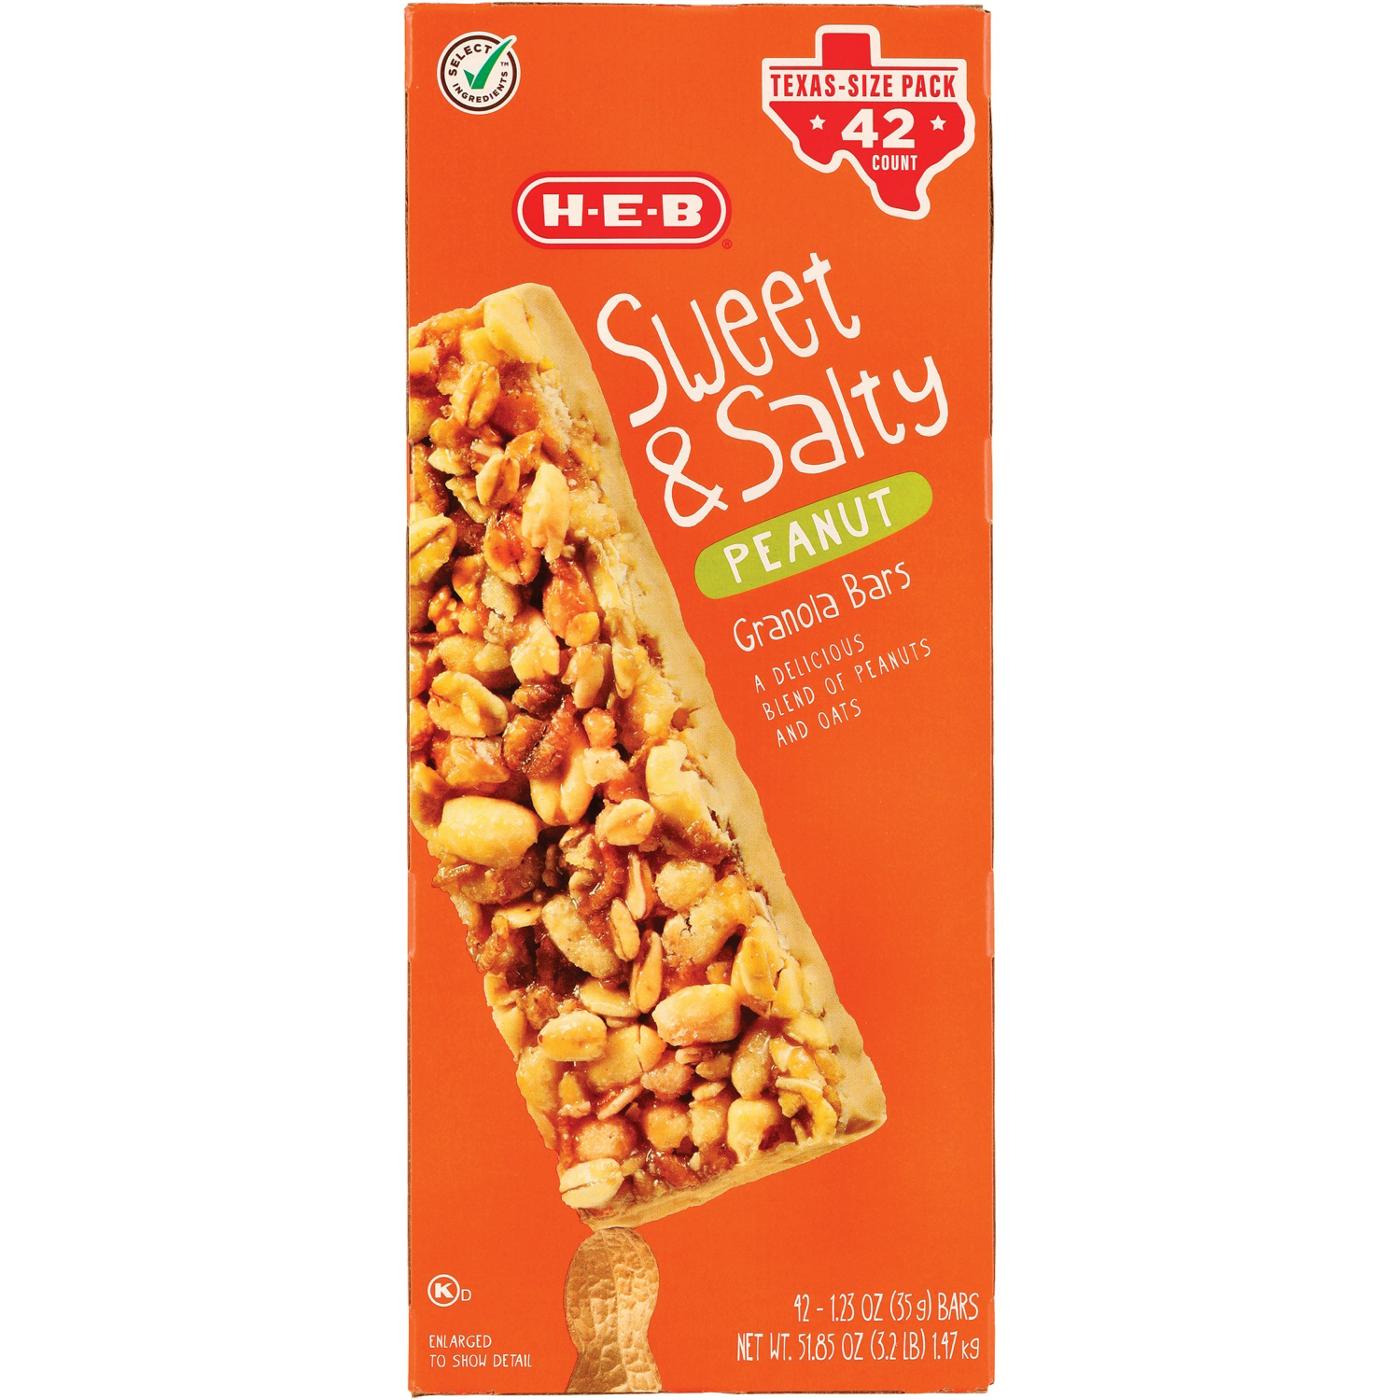 H-E-B Sweet & Salty Peanut Granola Bars - Texas-Size Pack; image 1 of 2